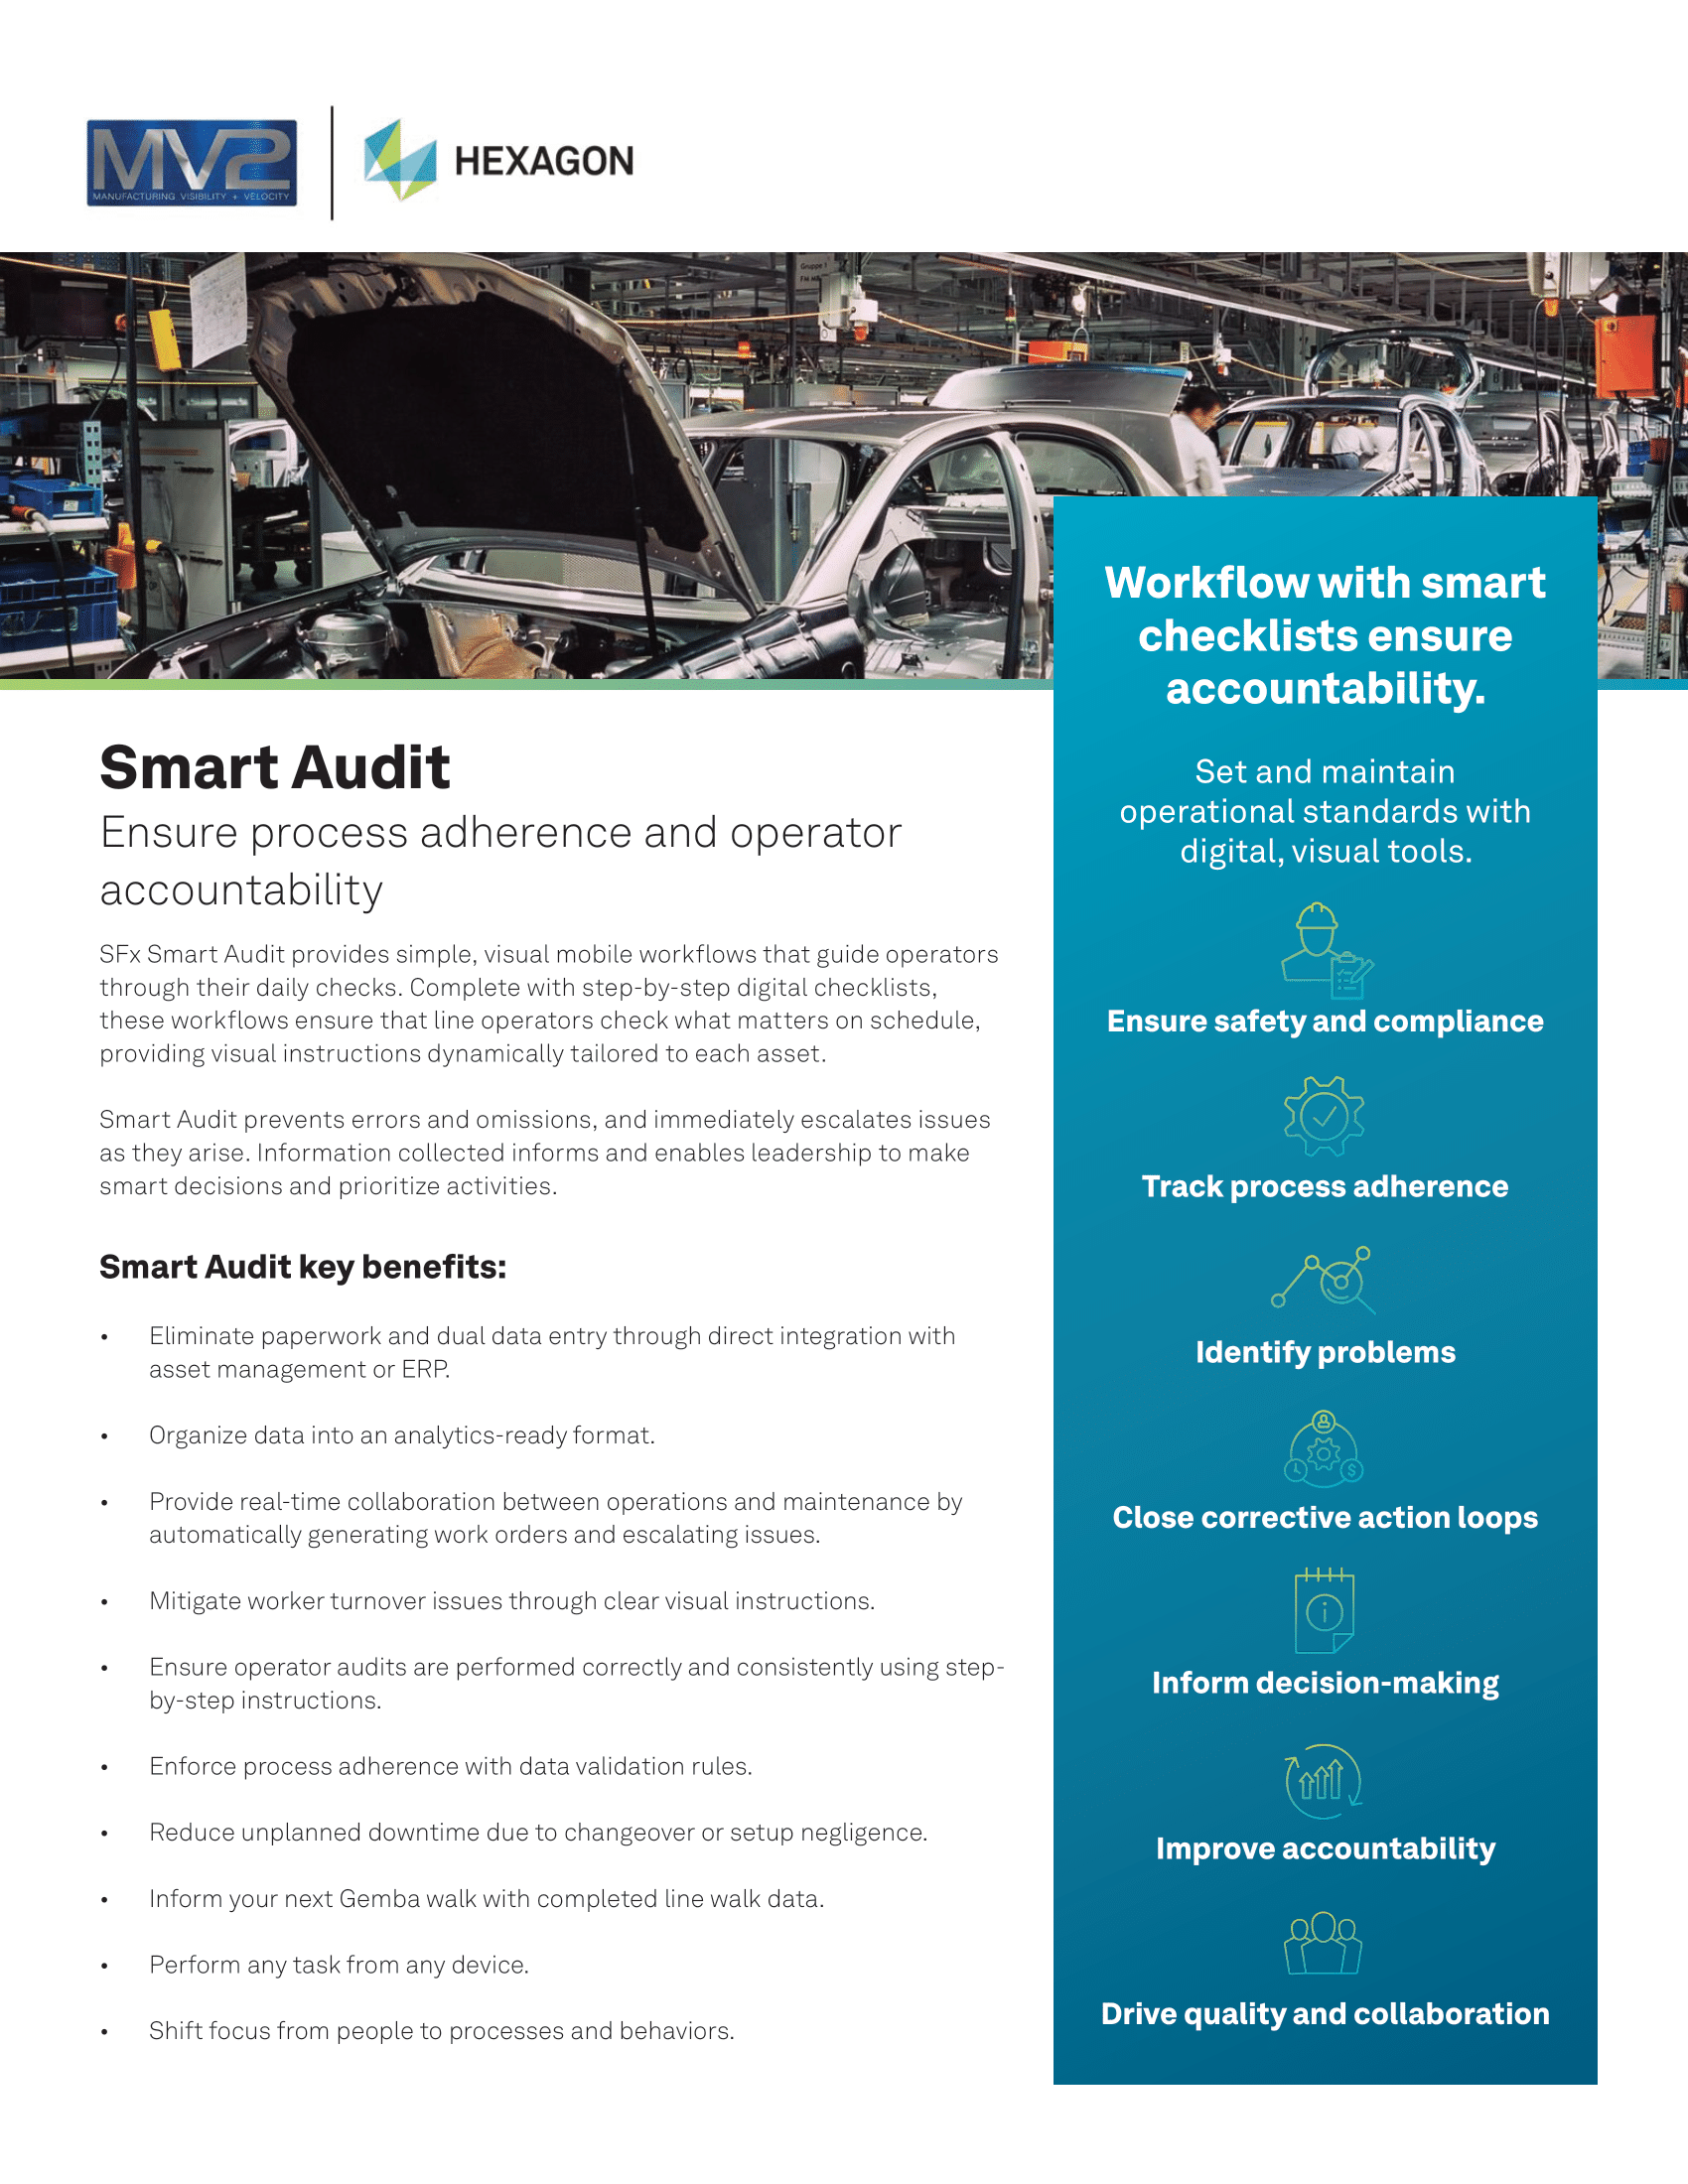 MV2 | Hexagon Smart Audit